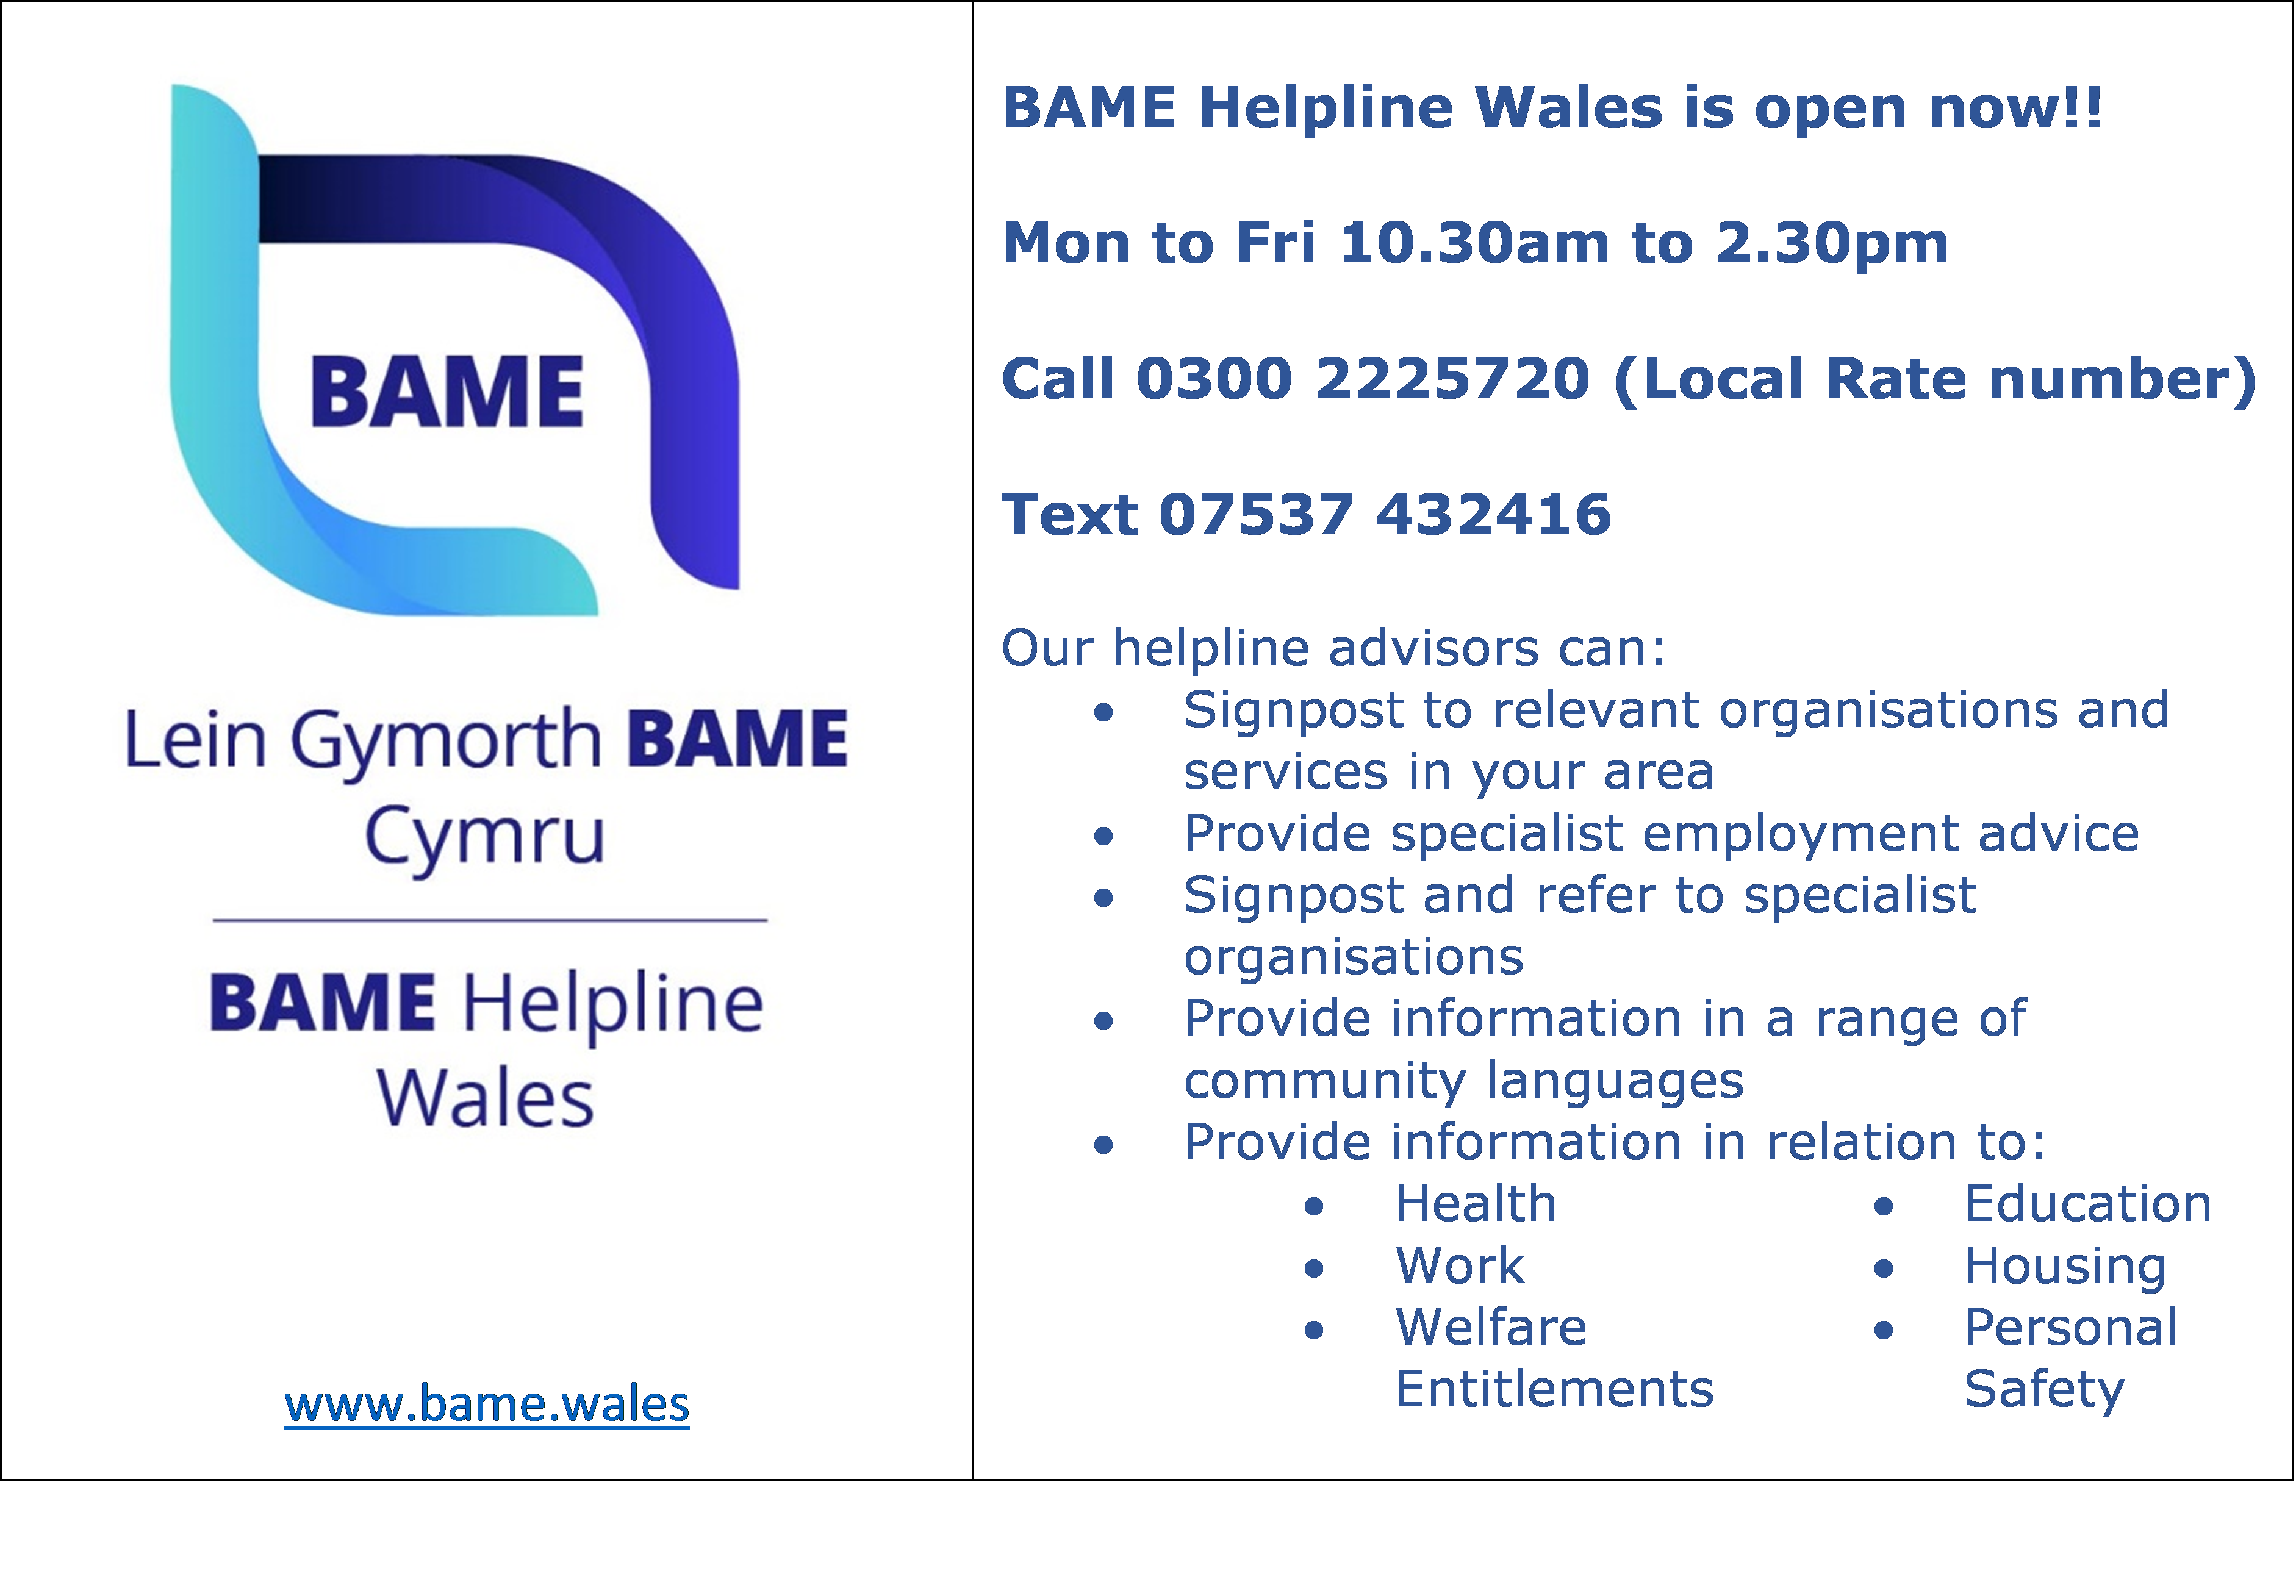 BAME helpline Wales